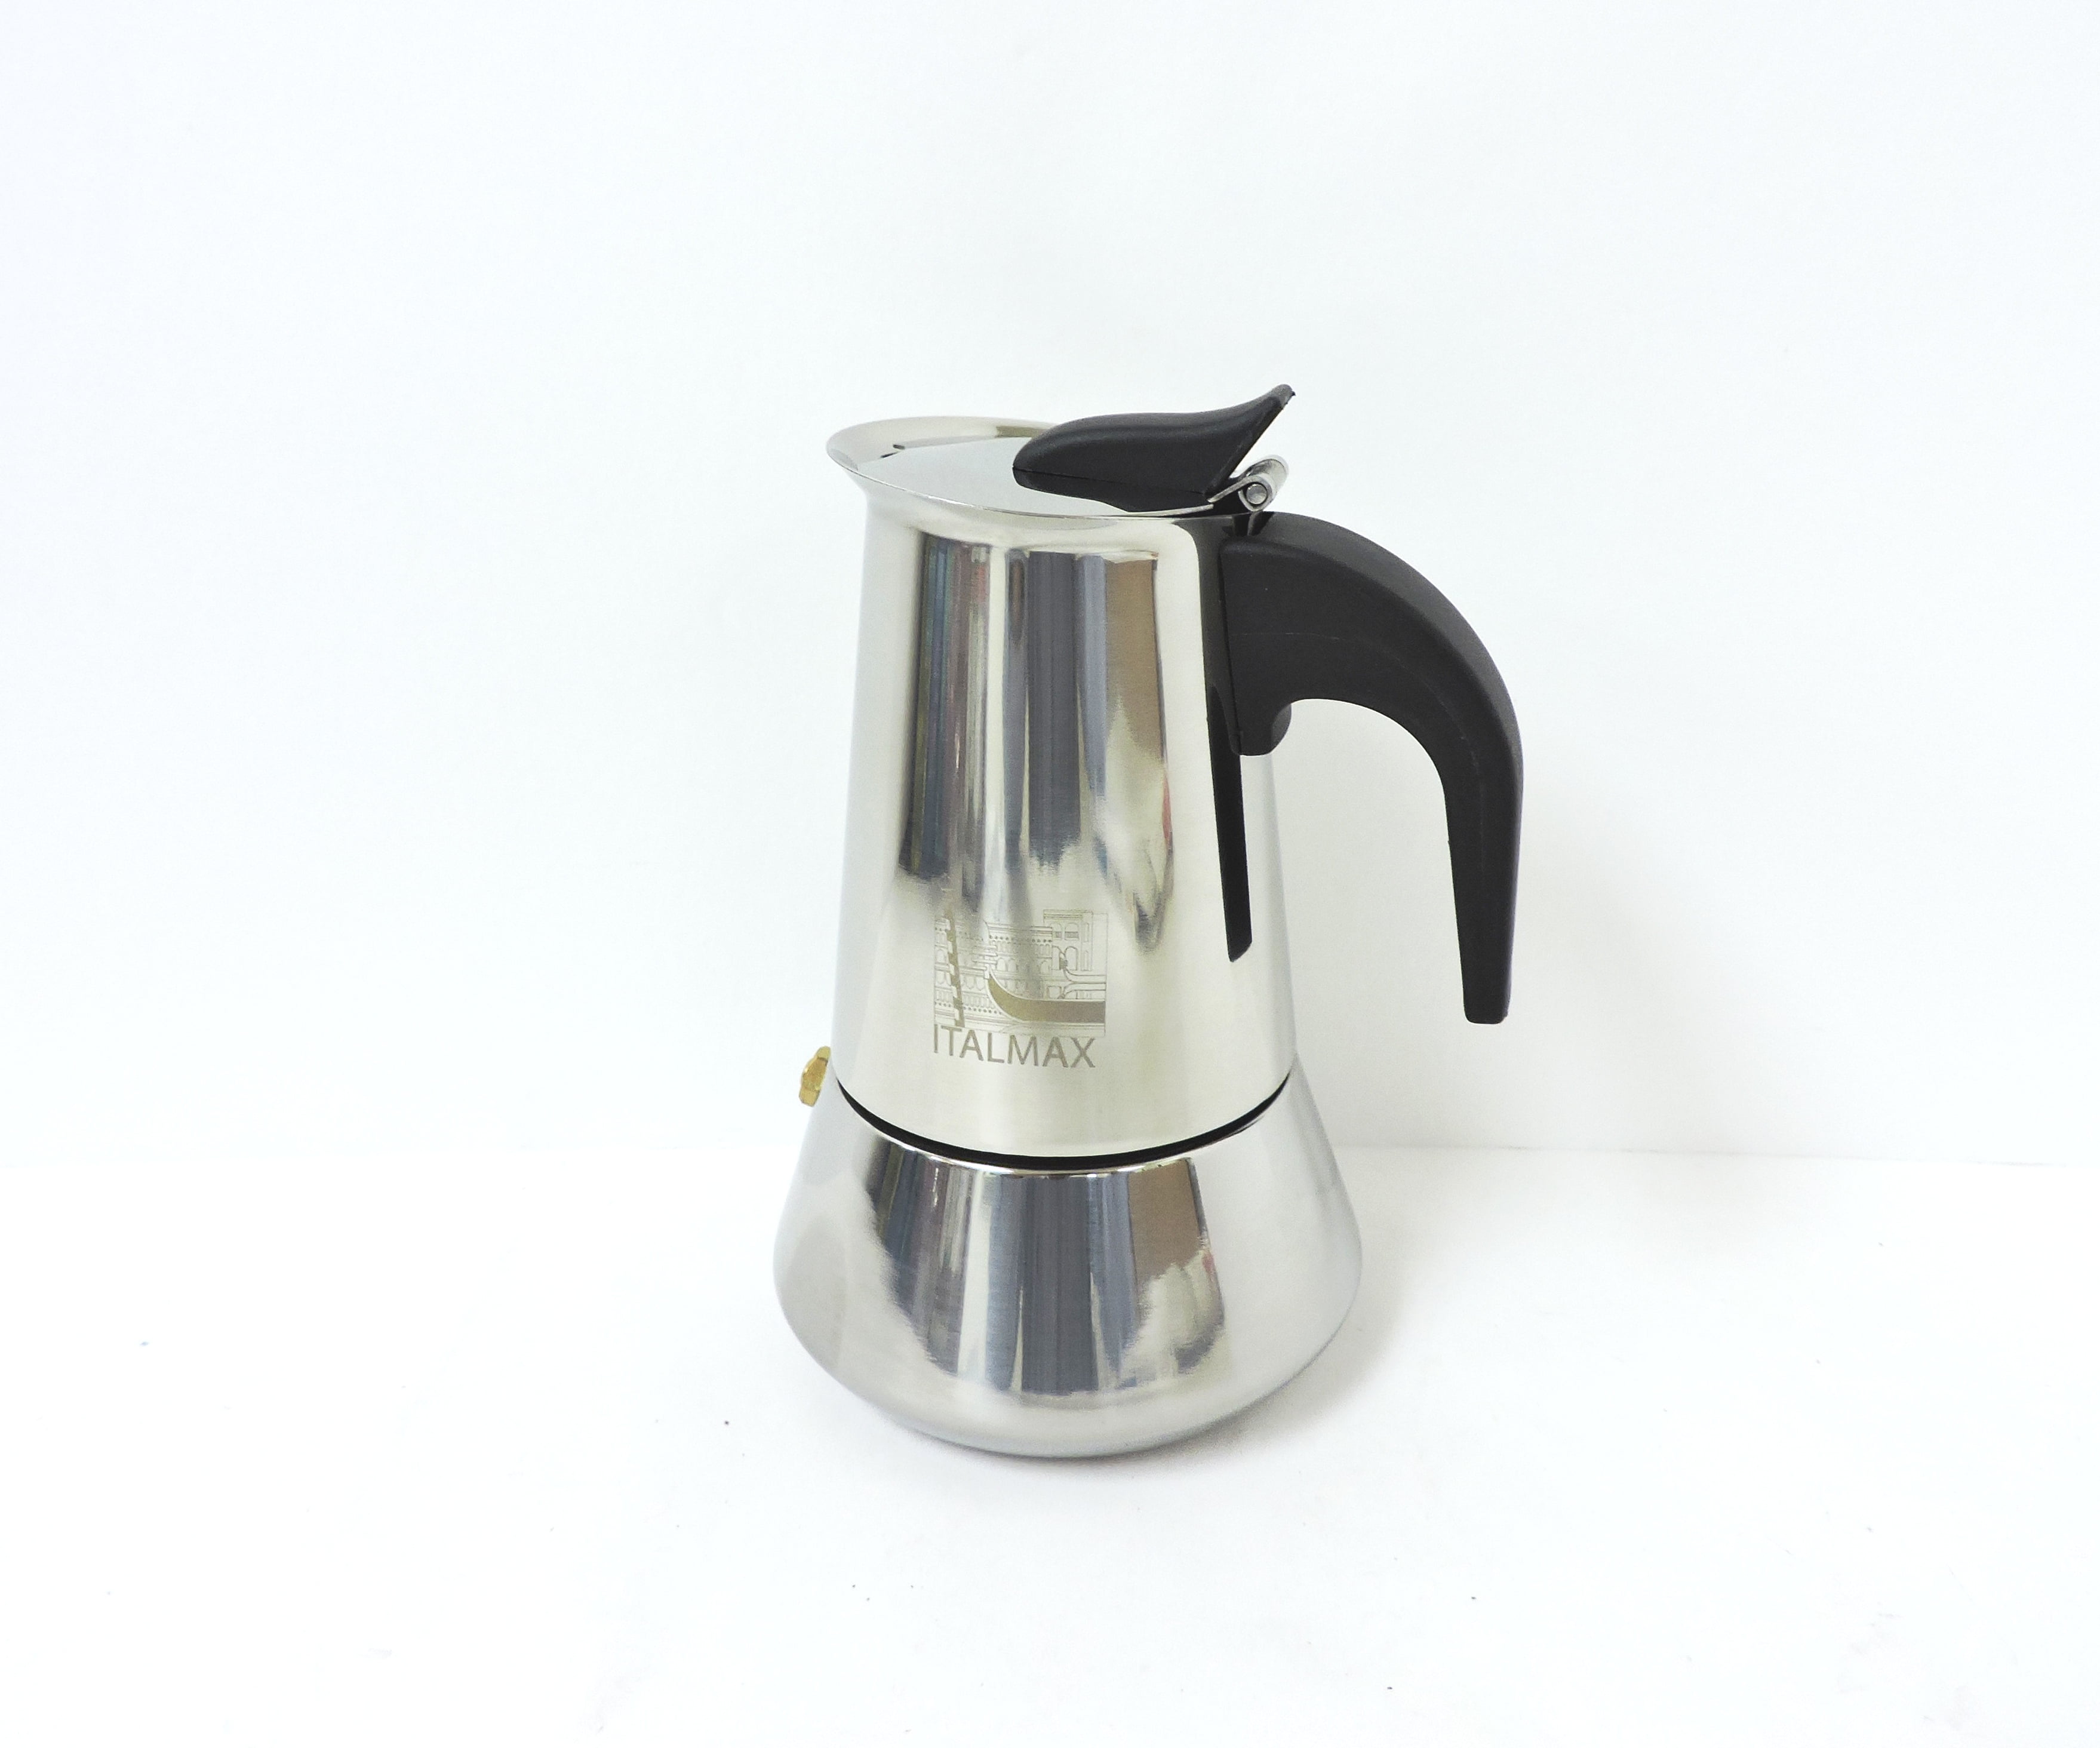 Italmax Bella Stainless Steel Espresso Coffee Maker 2 Cups - Walmart.com